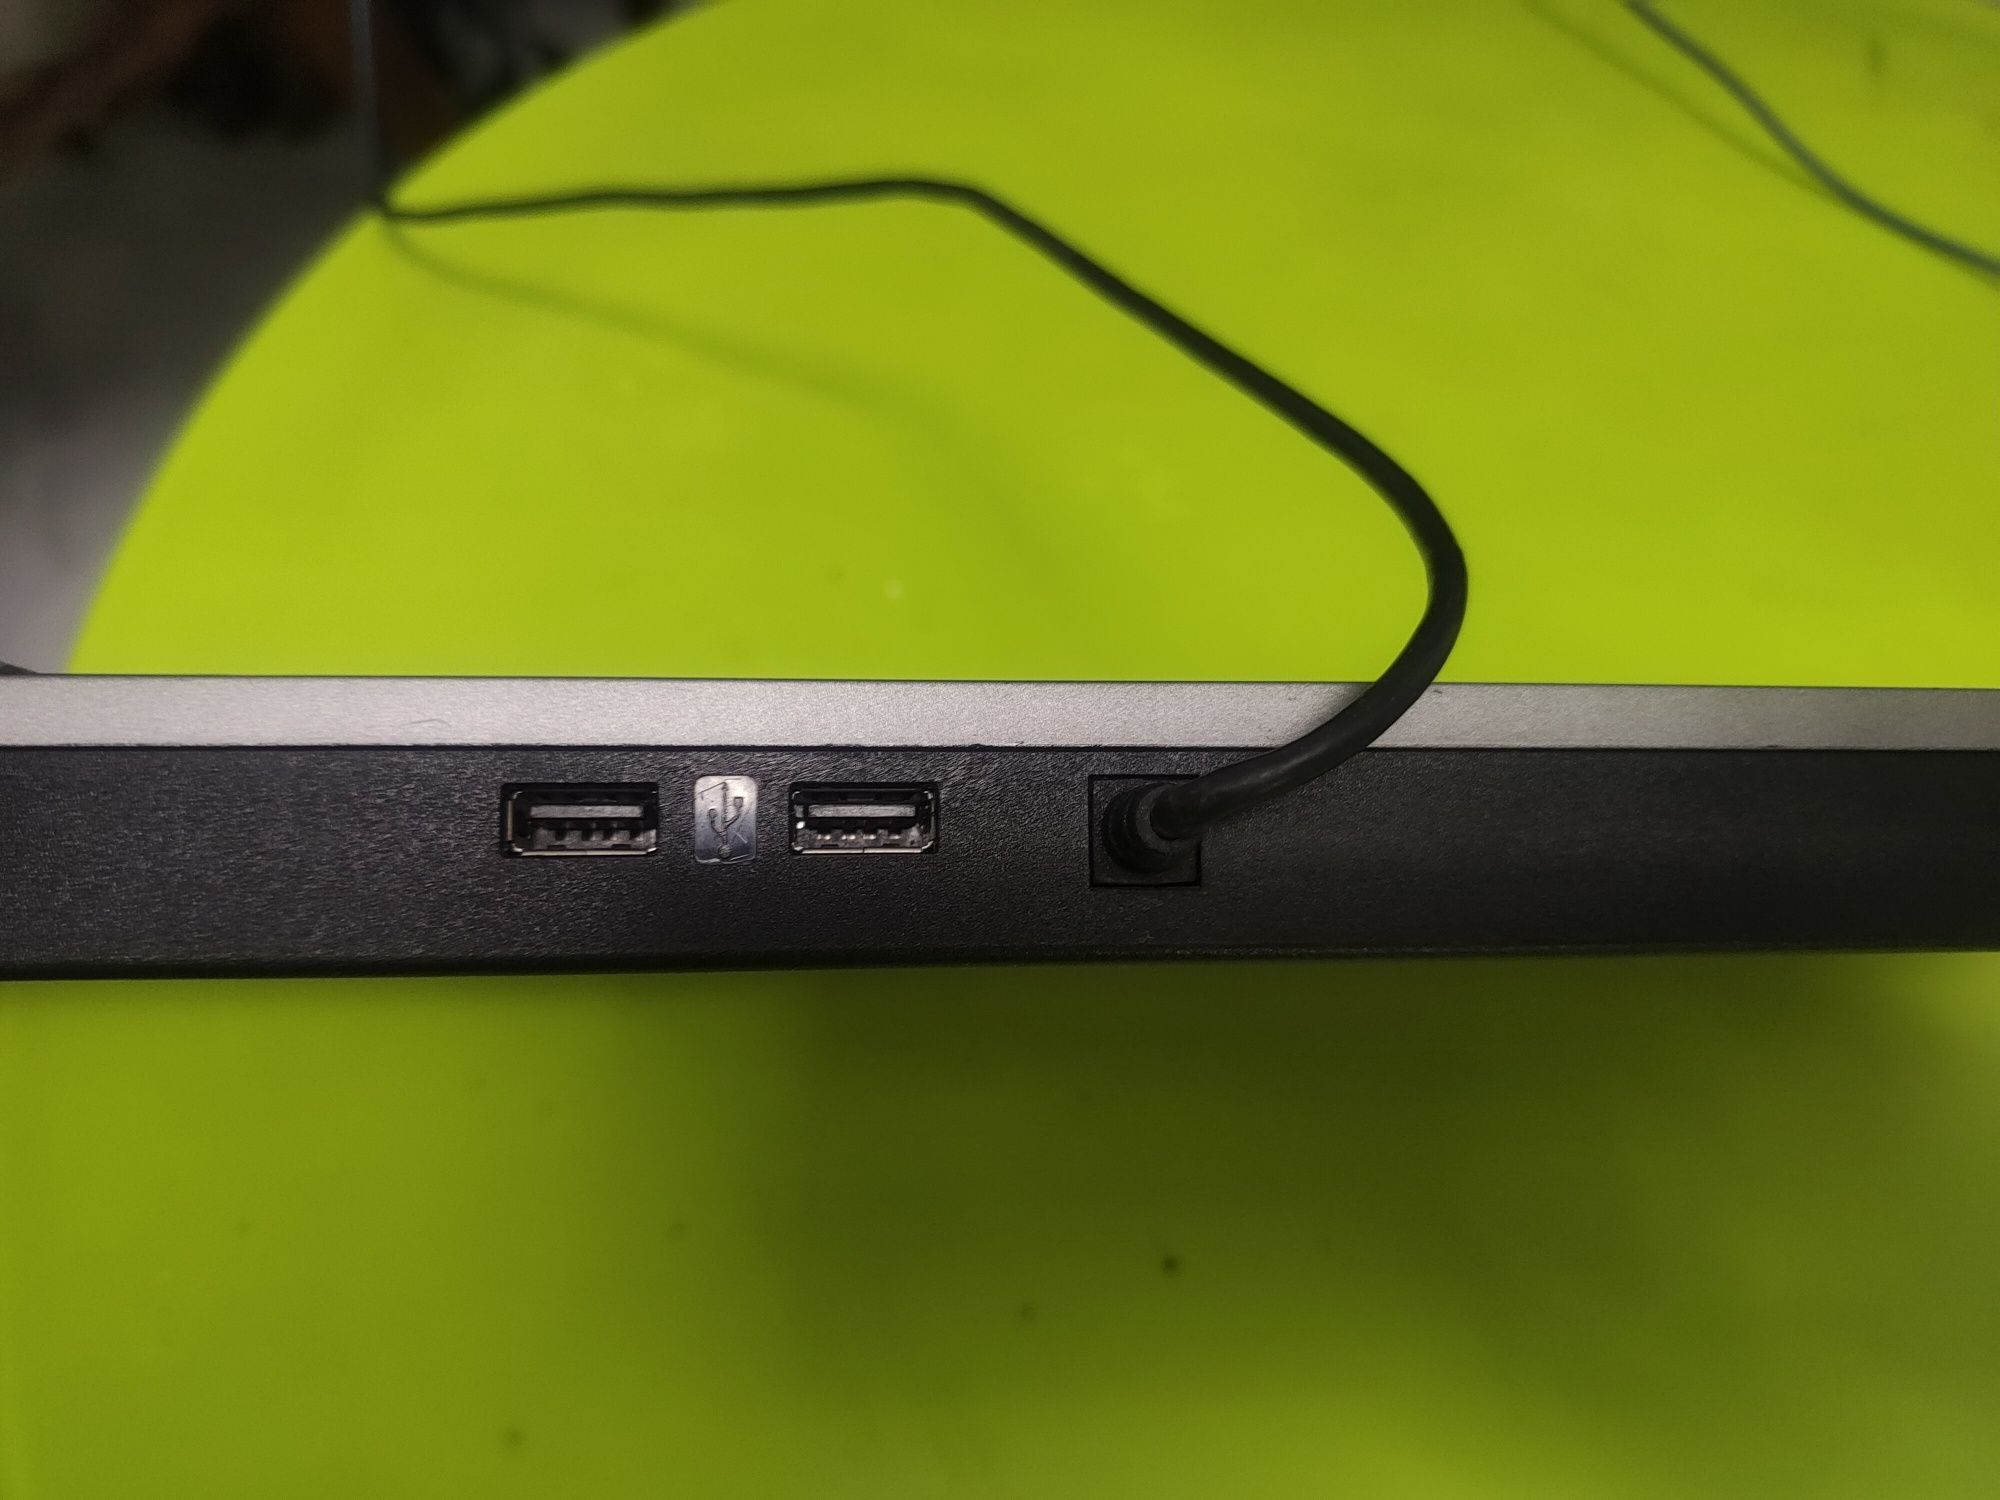 Tastatura Dell Multimedia cu Hub USBx2